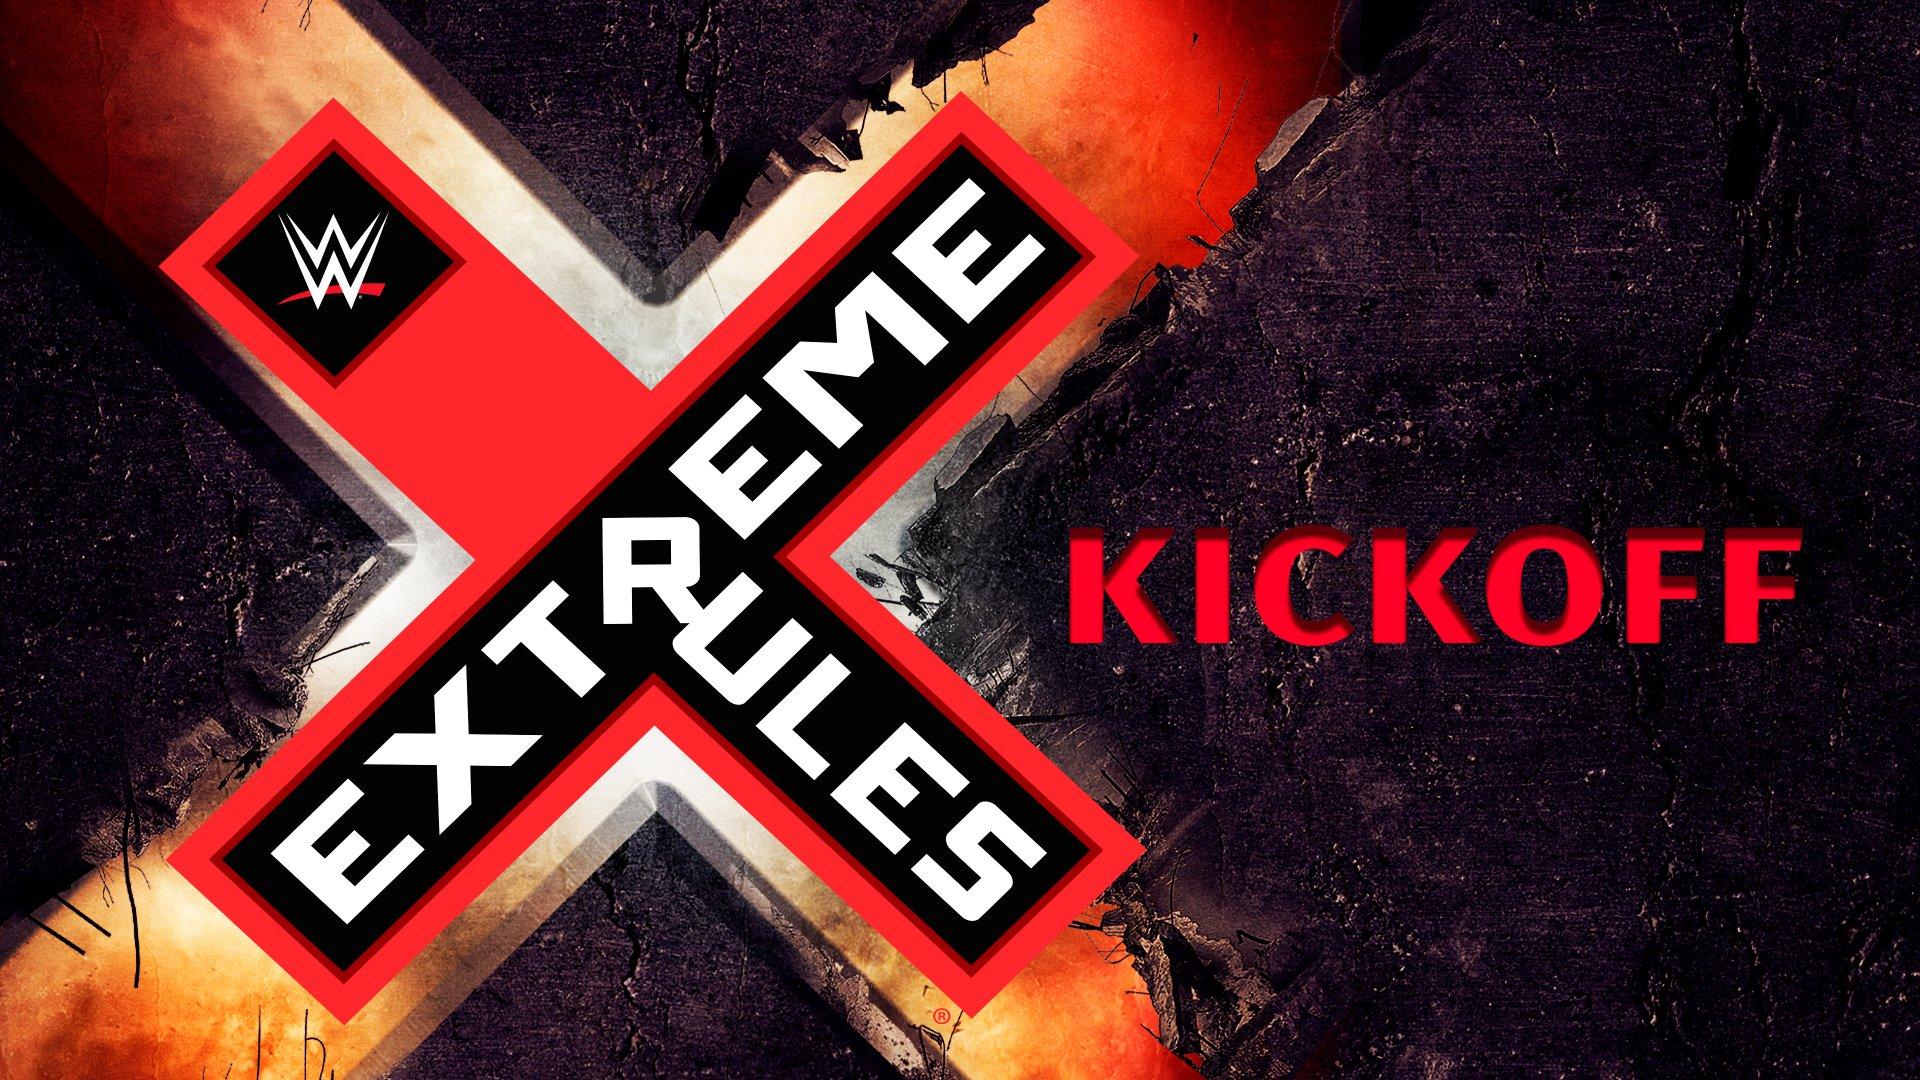 WWE Extreme Rules 2019 Kickoff